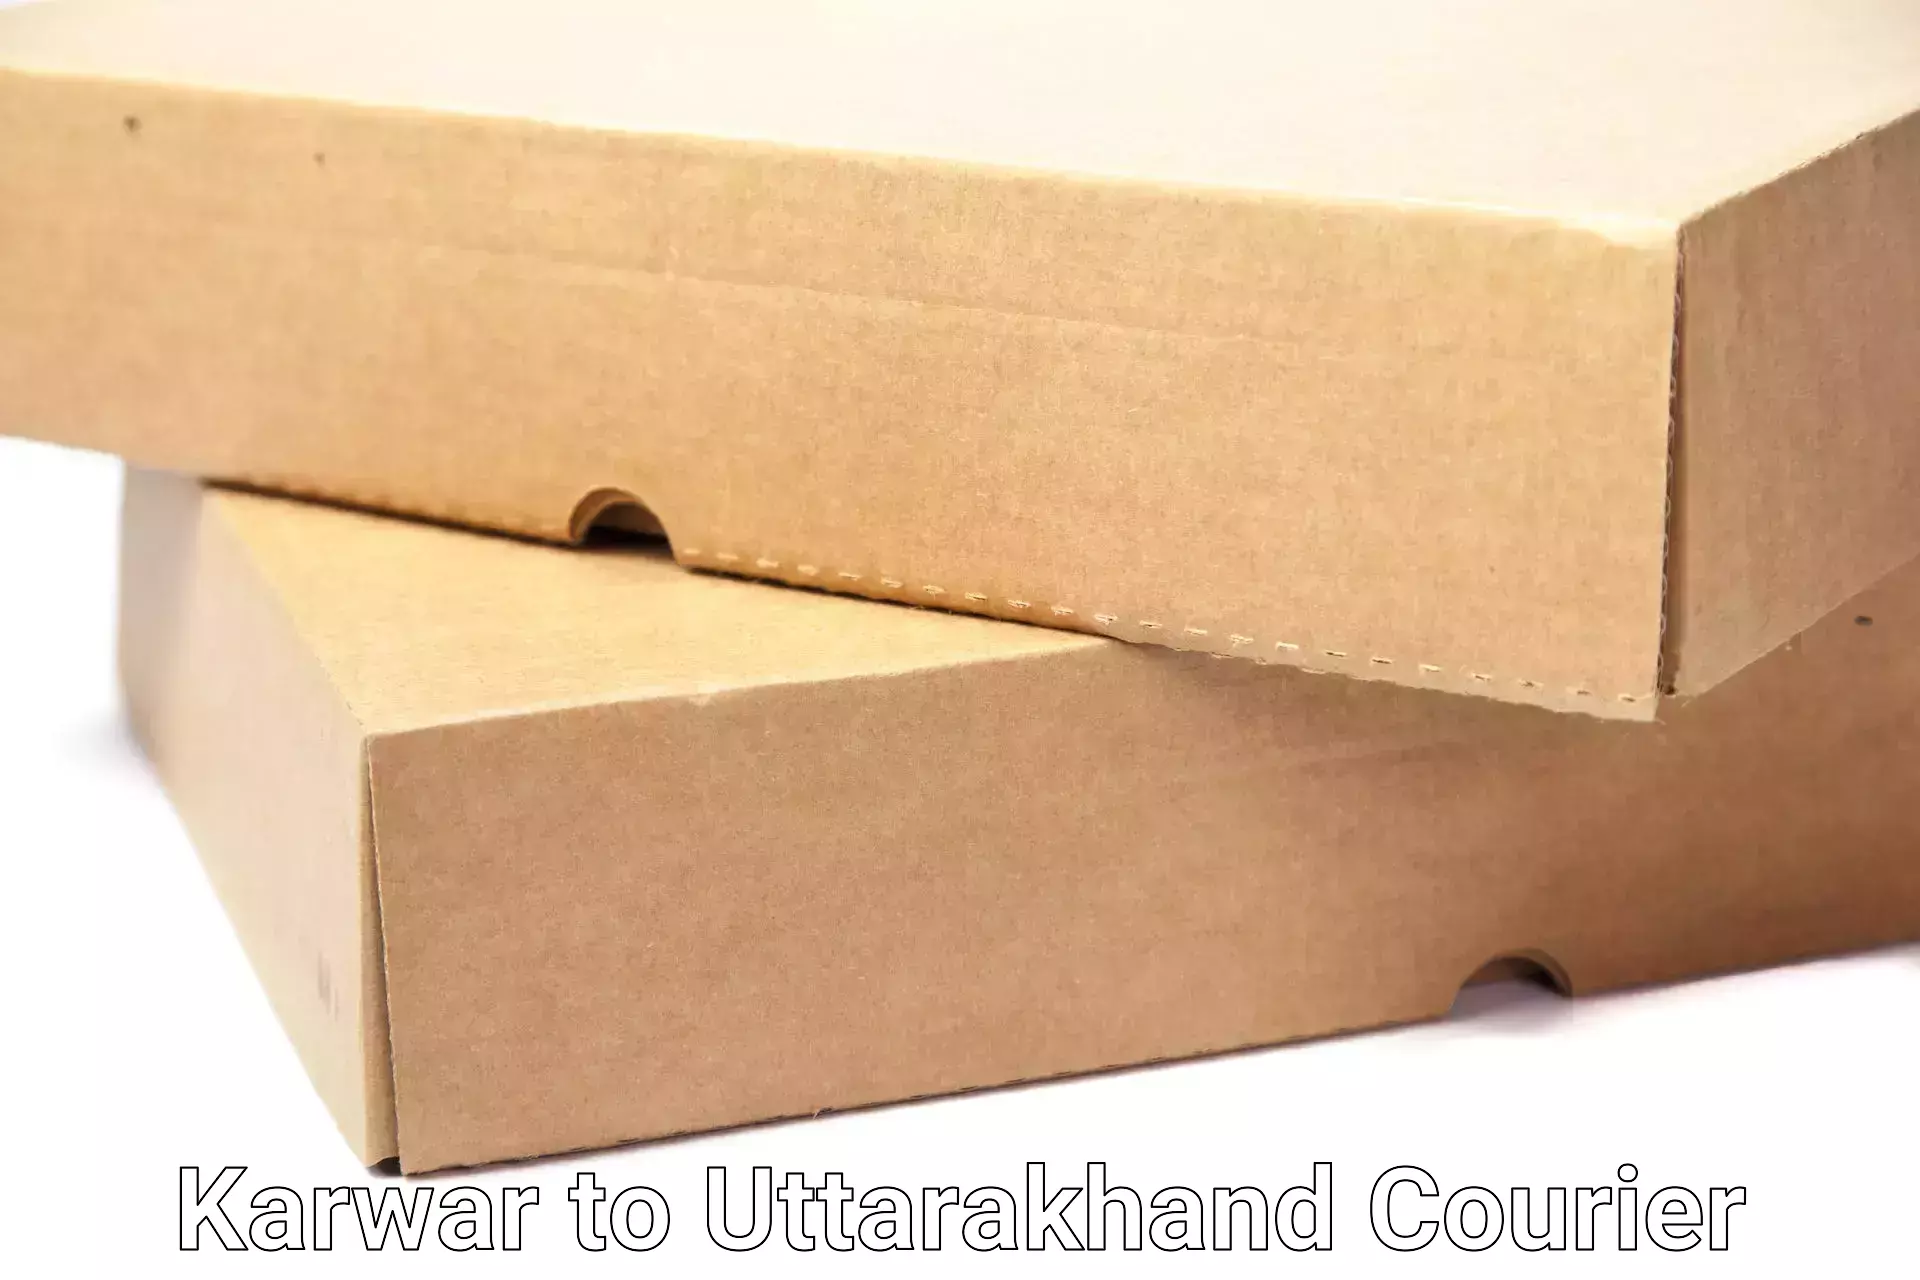 Professional moving assistance Karwar to Uttarakhand